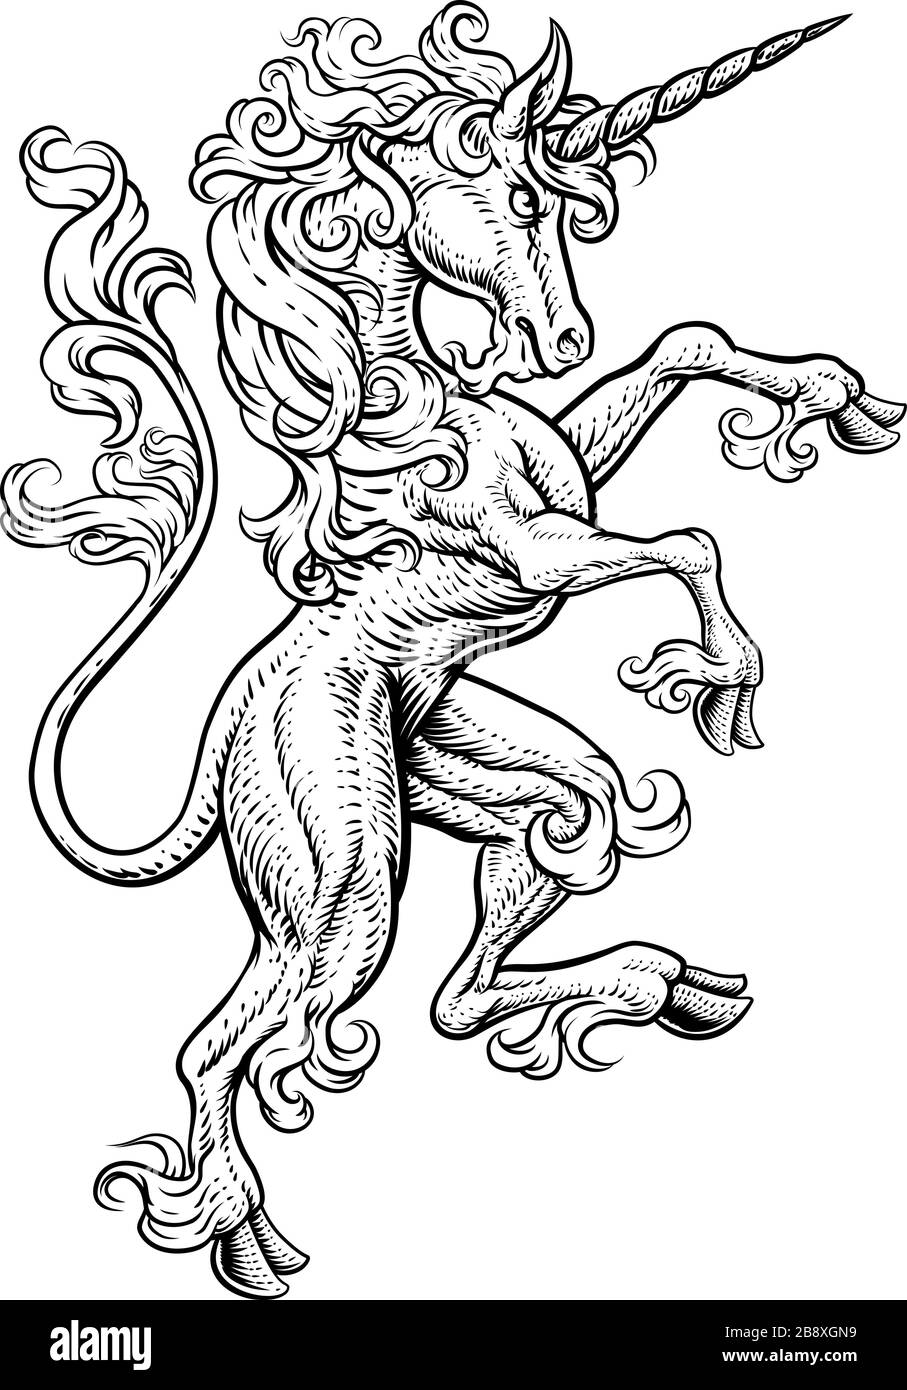 Unicorn Aufzuchtendes Rampantes Wappen Crest Horse Stock Vektor